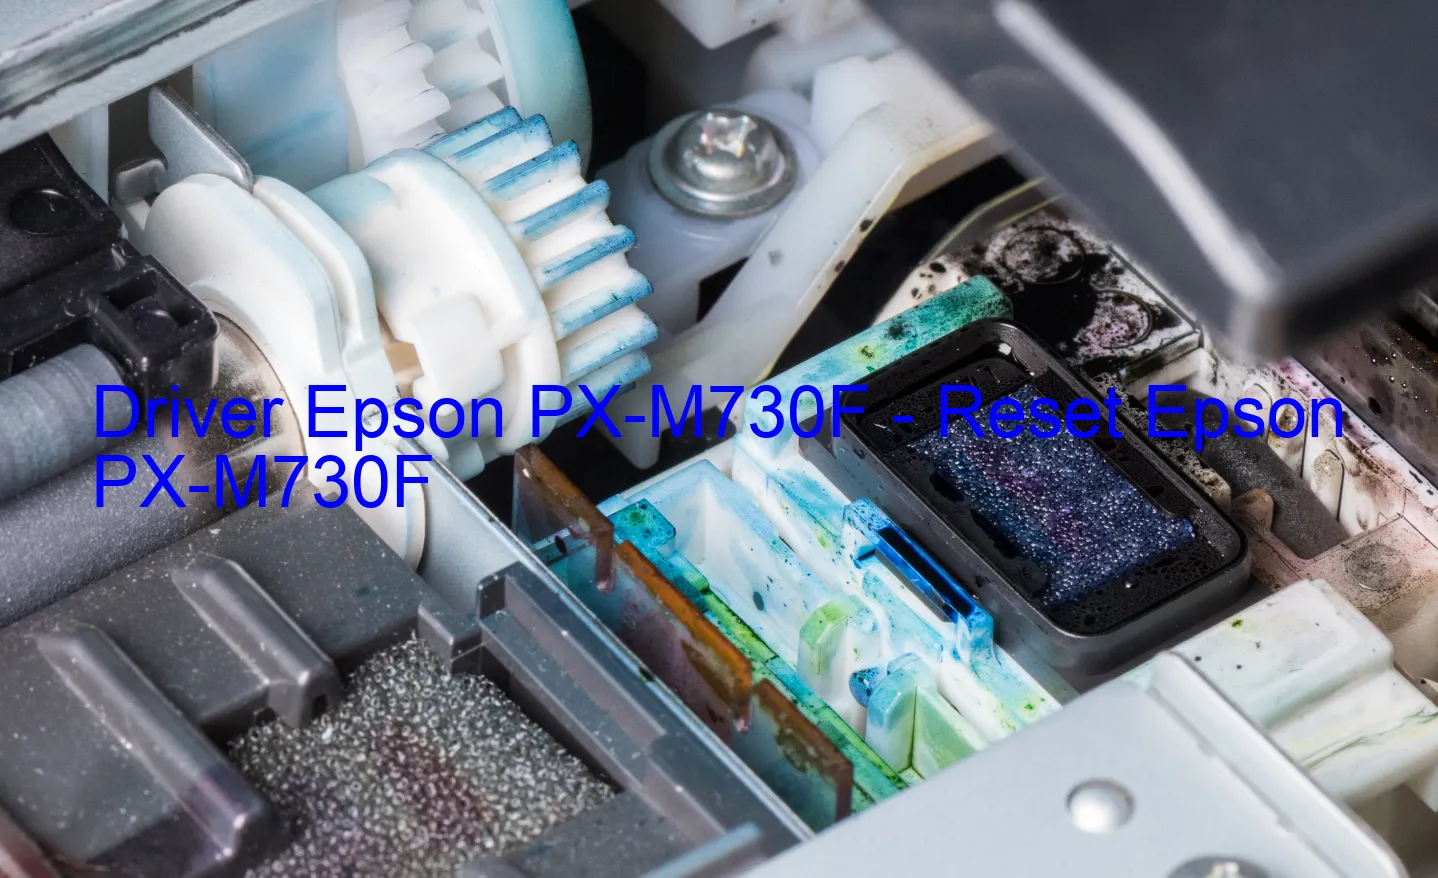 Epson PX-M730Fのドライバー、Epson PX-M730Fのリセットソフトウェア